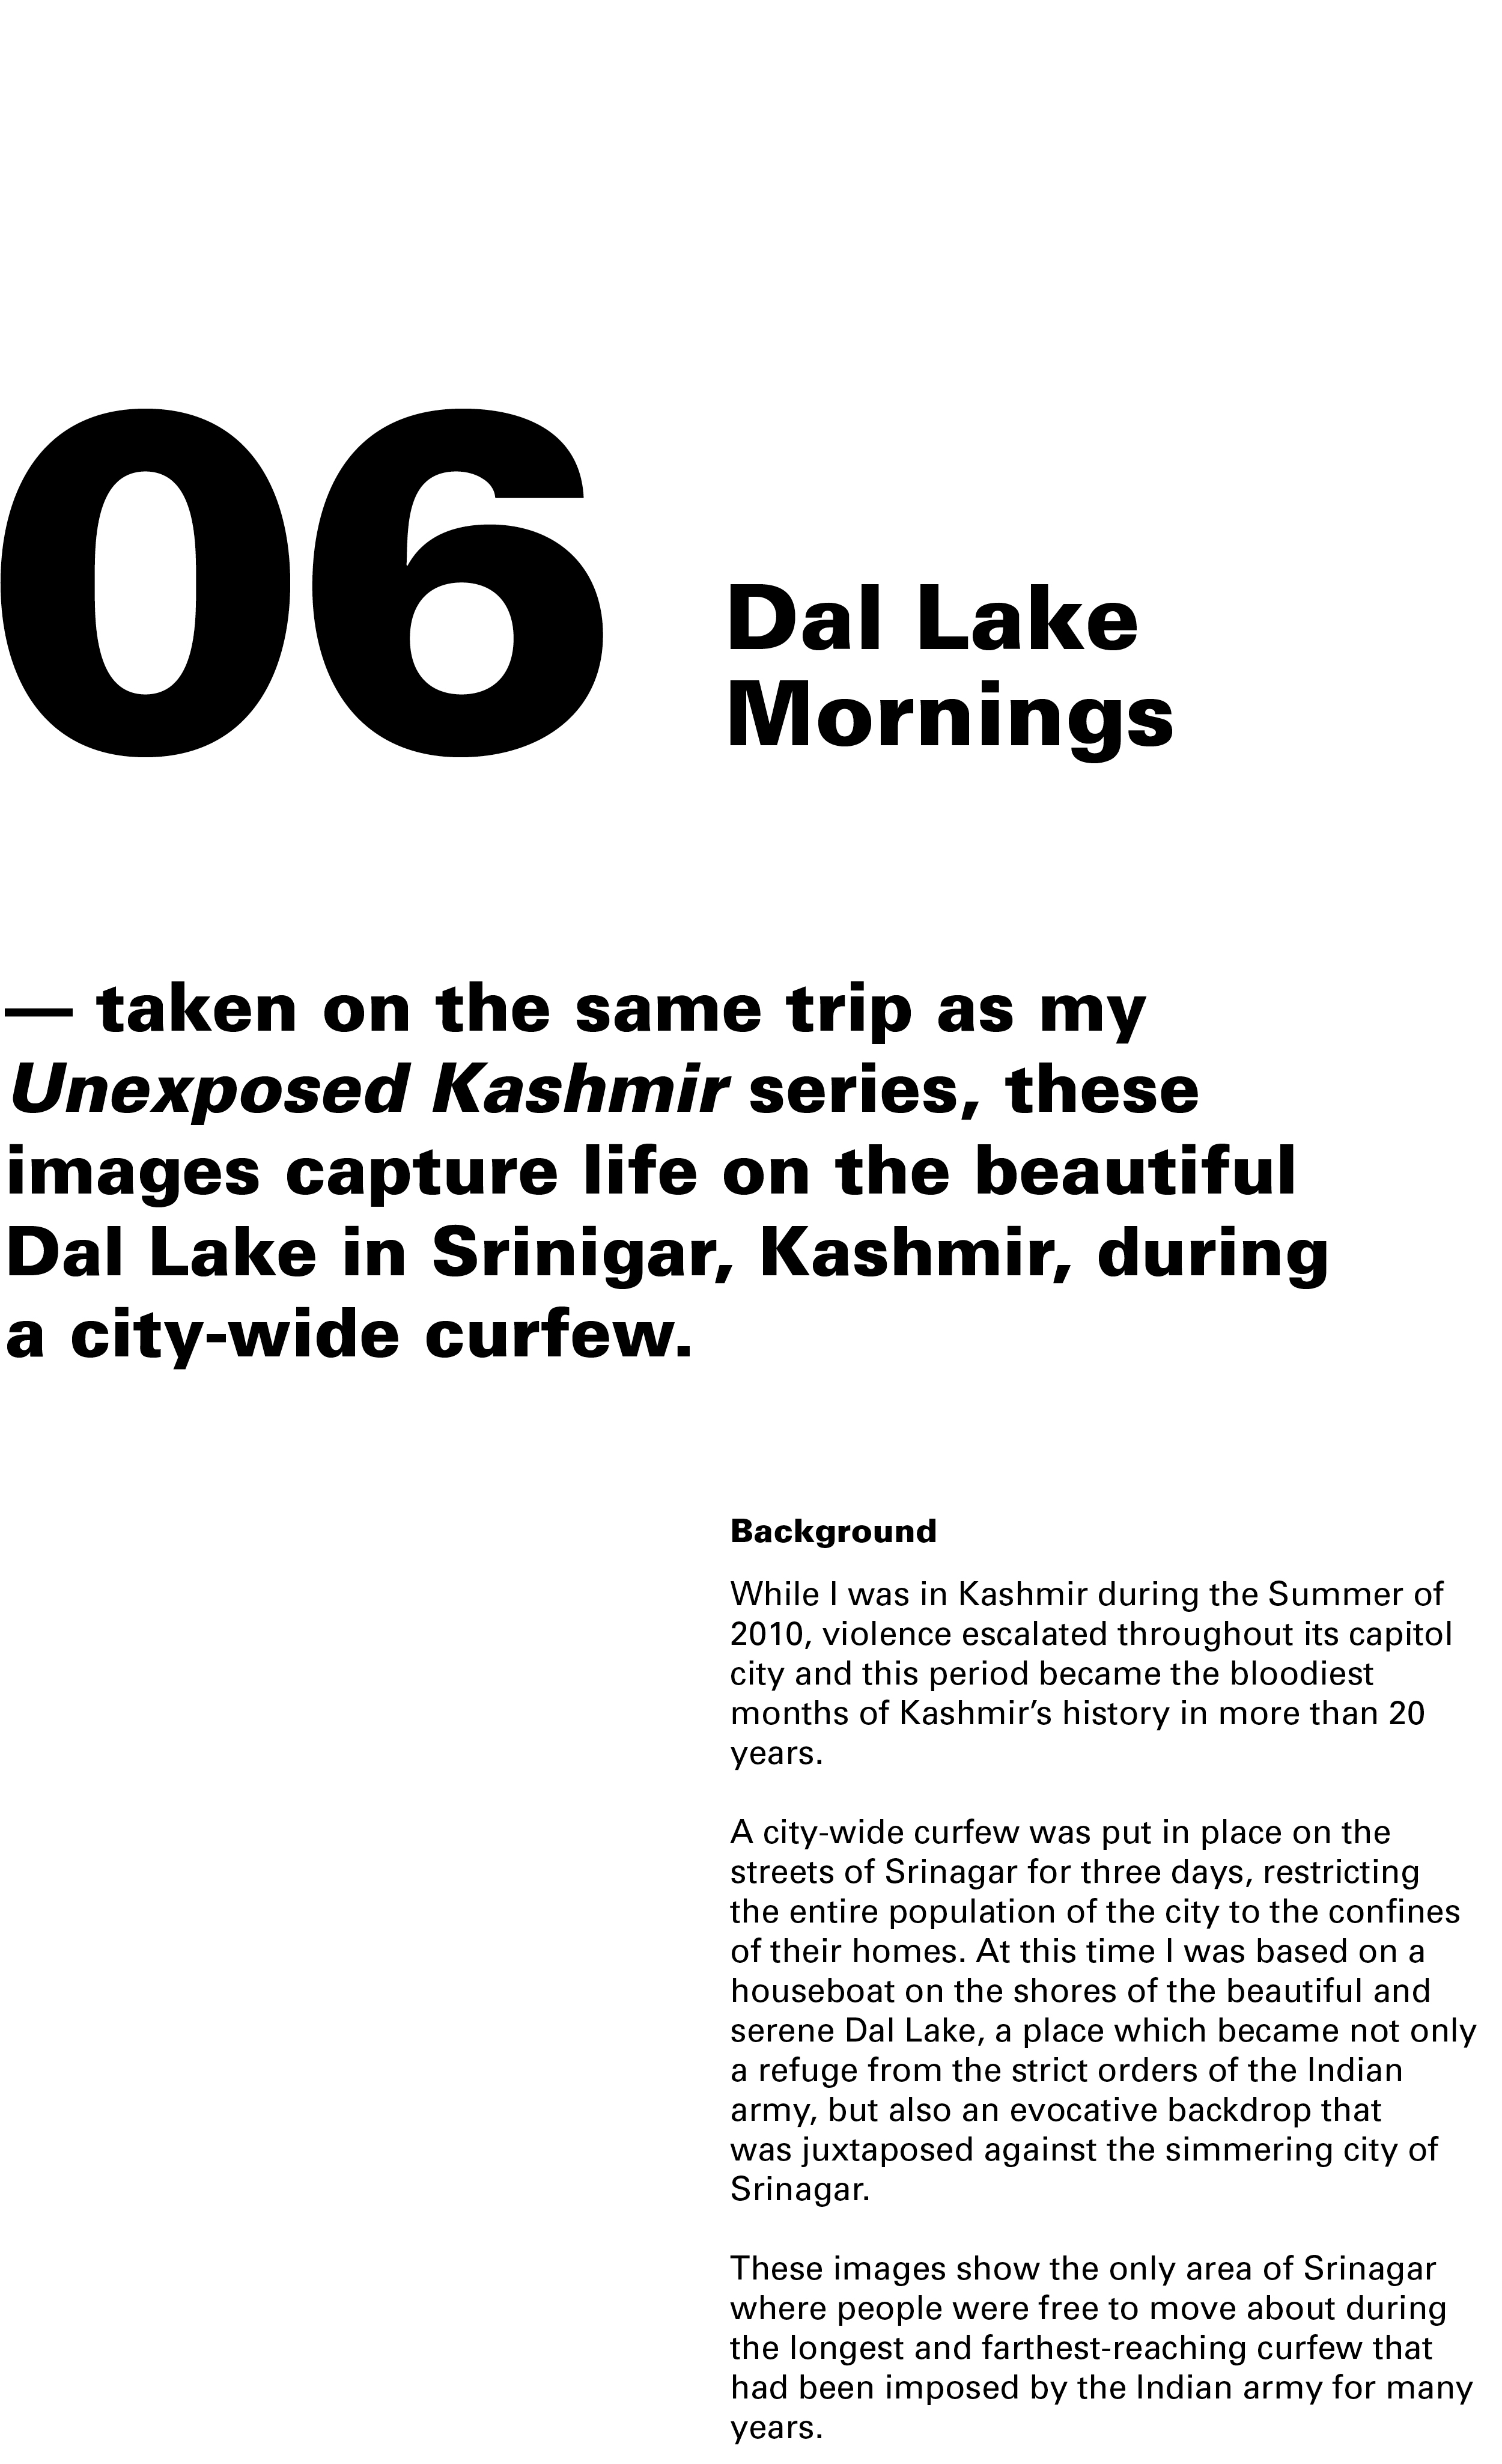 DalLakeMornings_Text.jpg